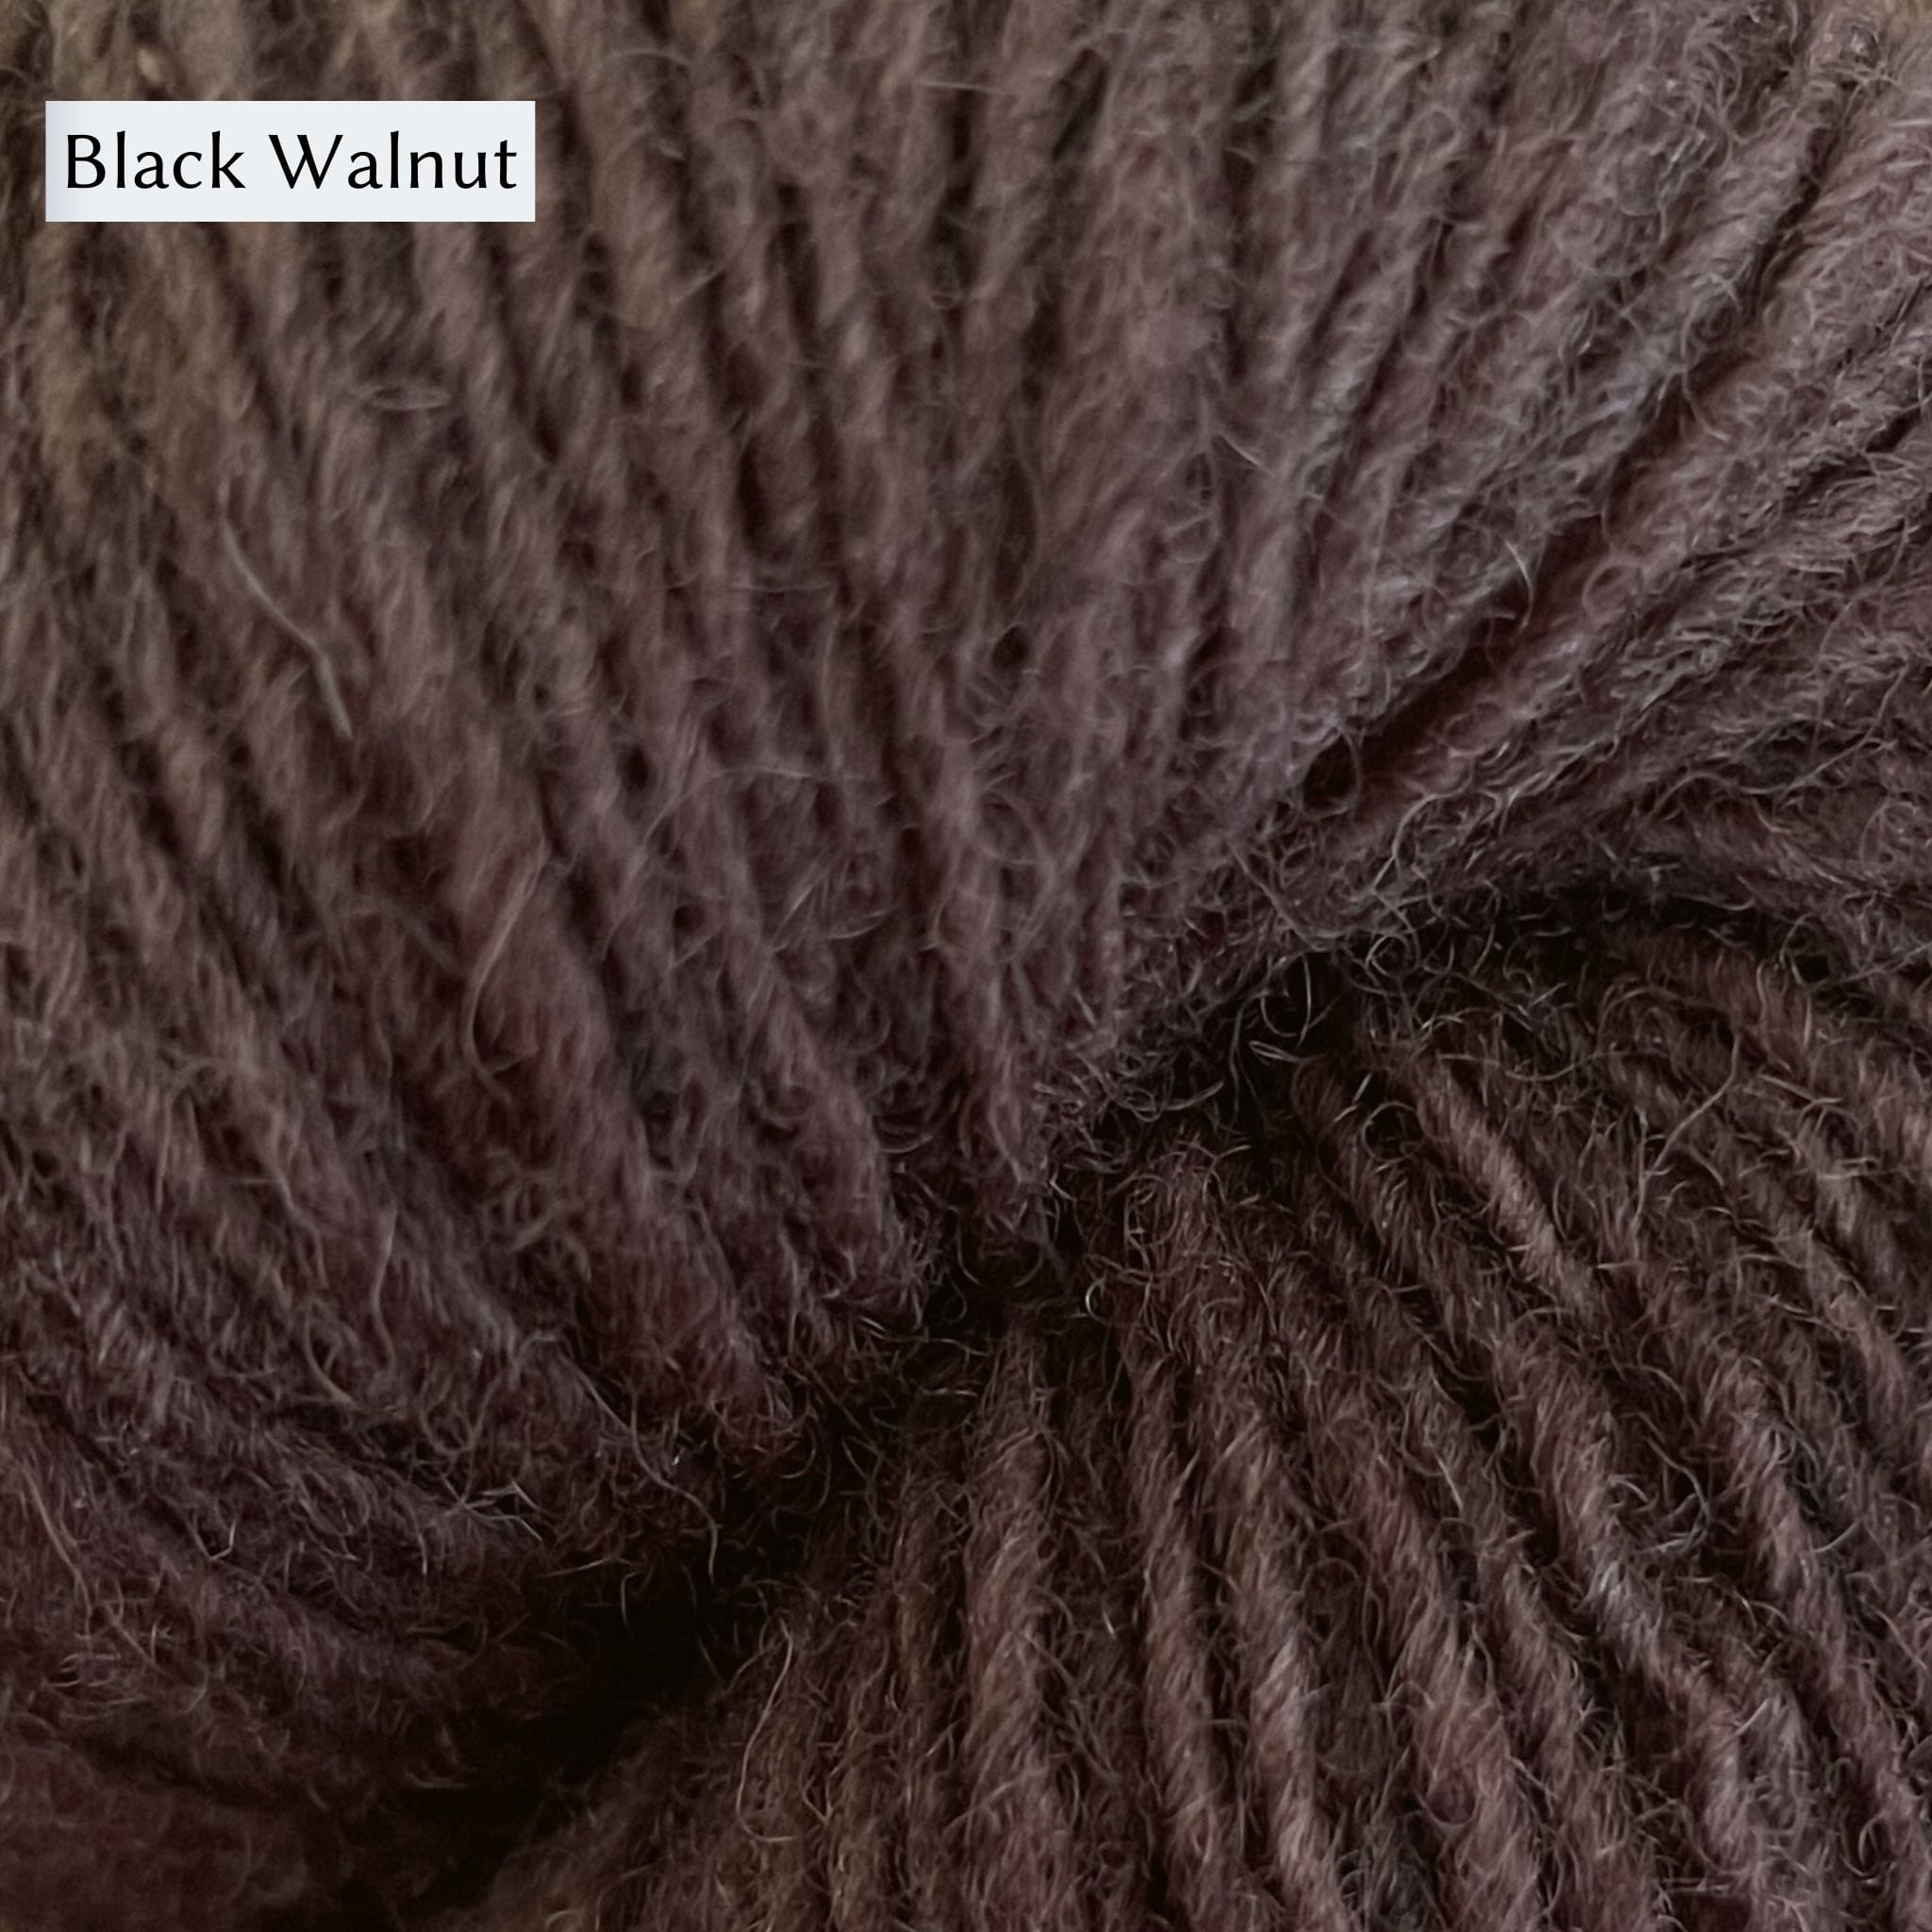 Lichen & Lace Rustic Heather Sport, a sport weight single-ply yarn, in Black Walnut, a deep cool brown